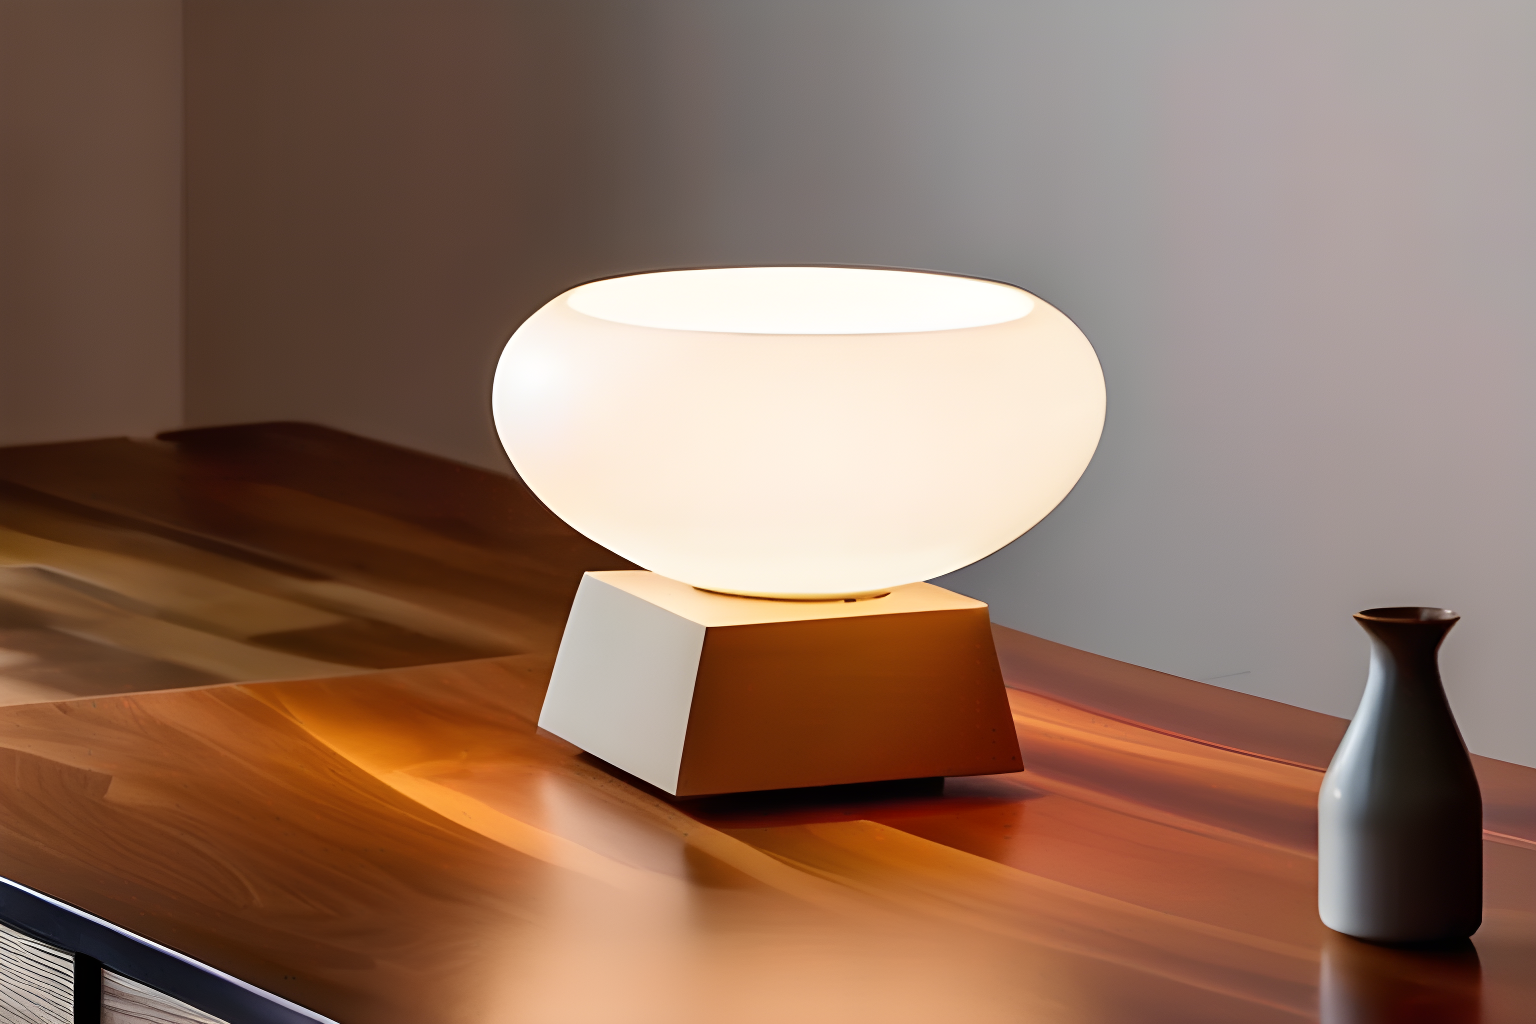 a sculpture that doubles as a lamp